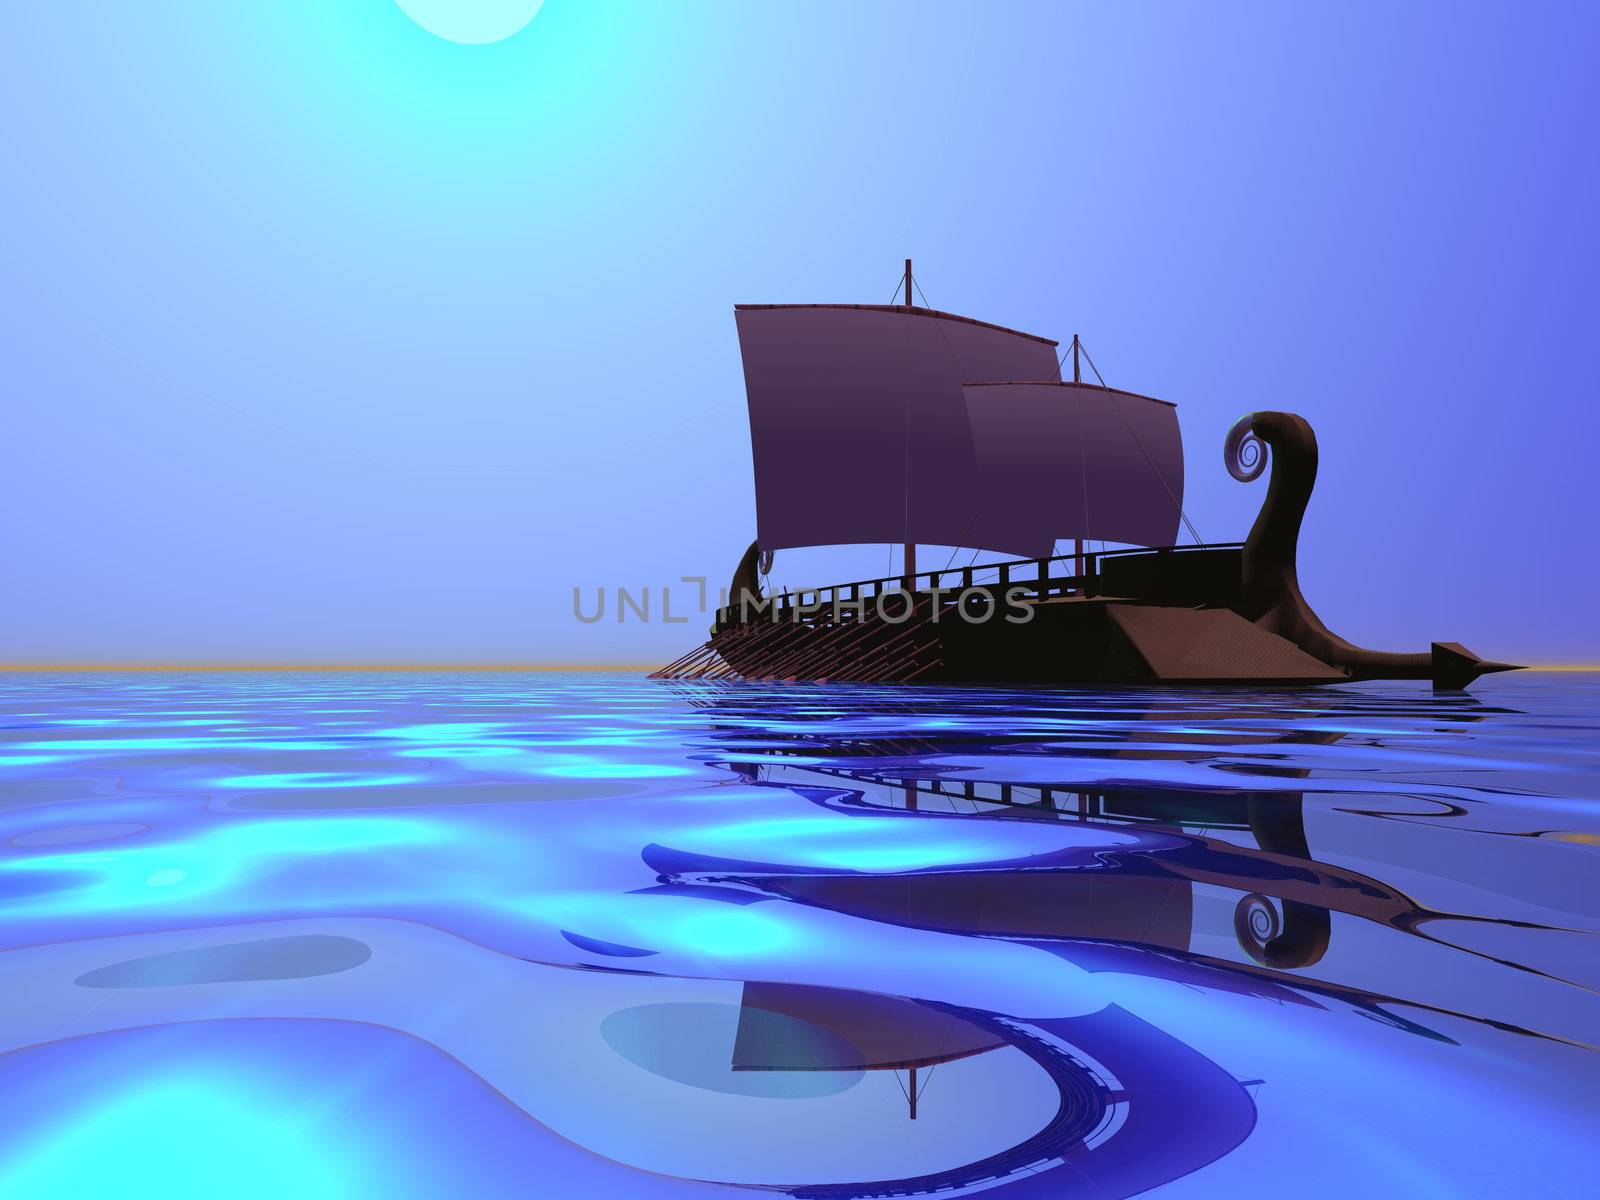 A greek ship sails on beautiful glowing waters.